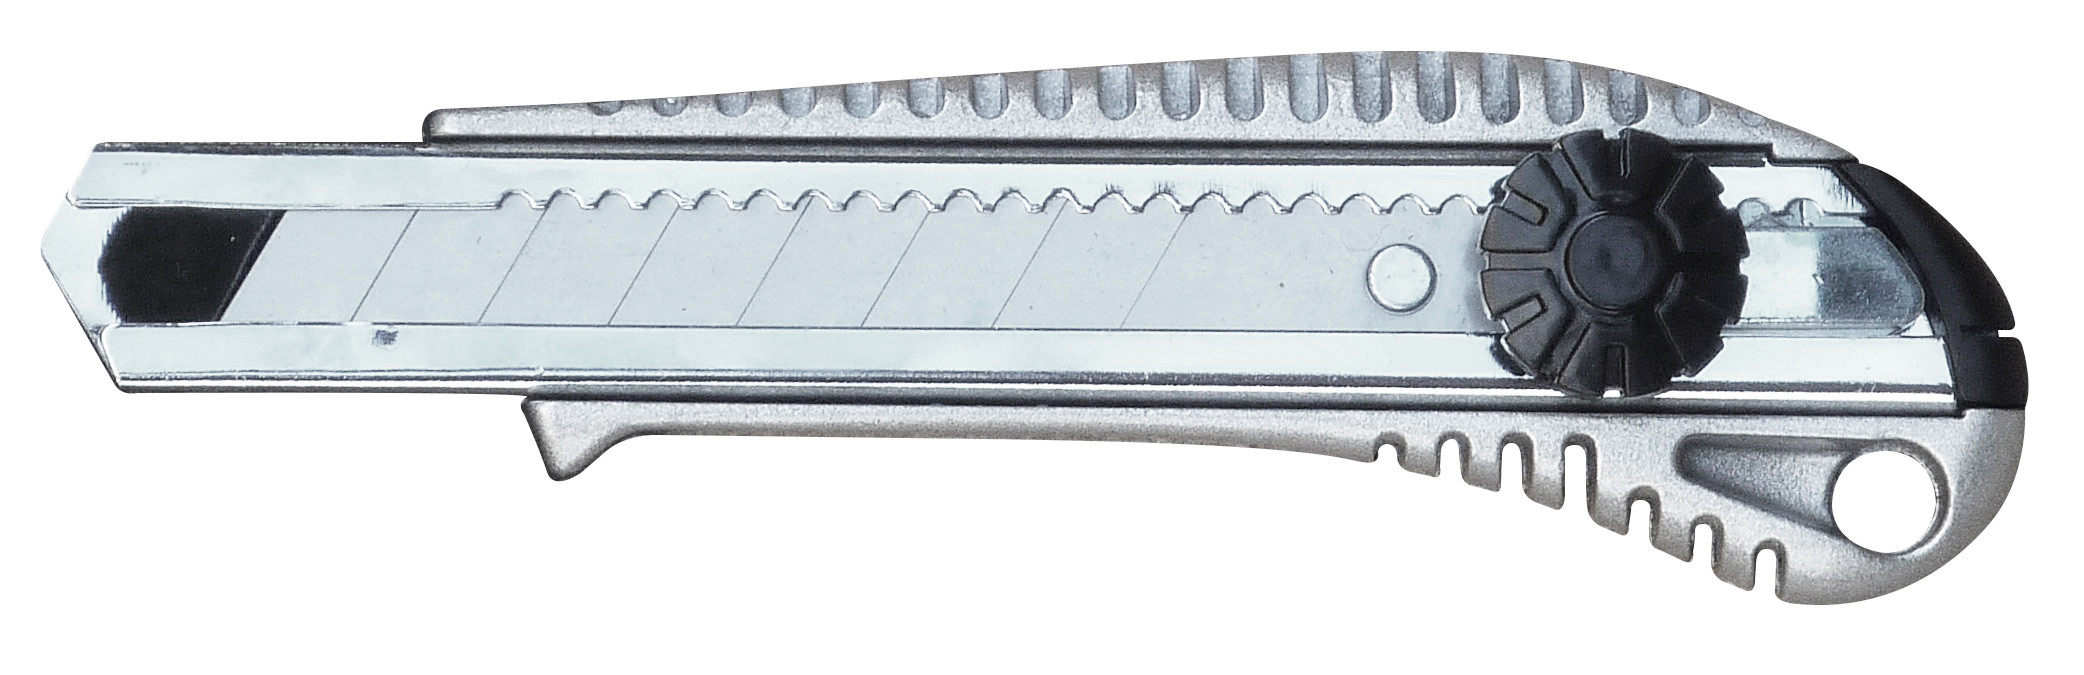 Cutter aluminium 18 mm avec serrage vis